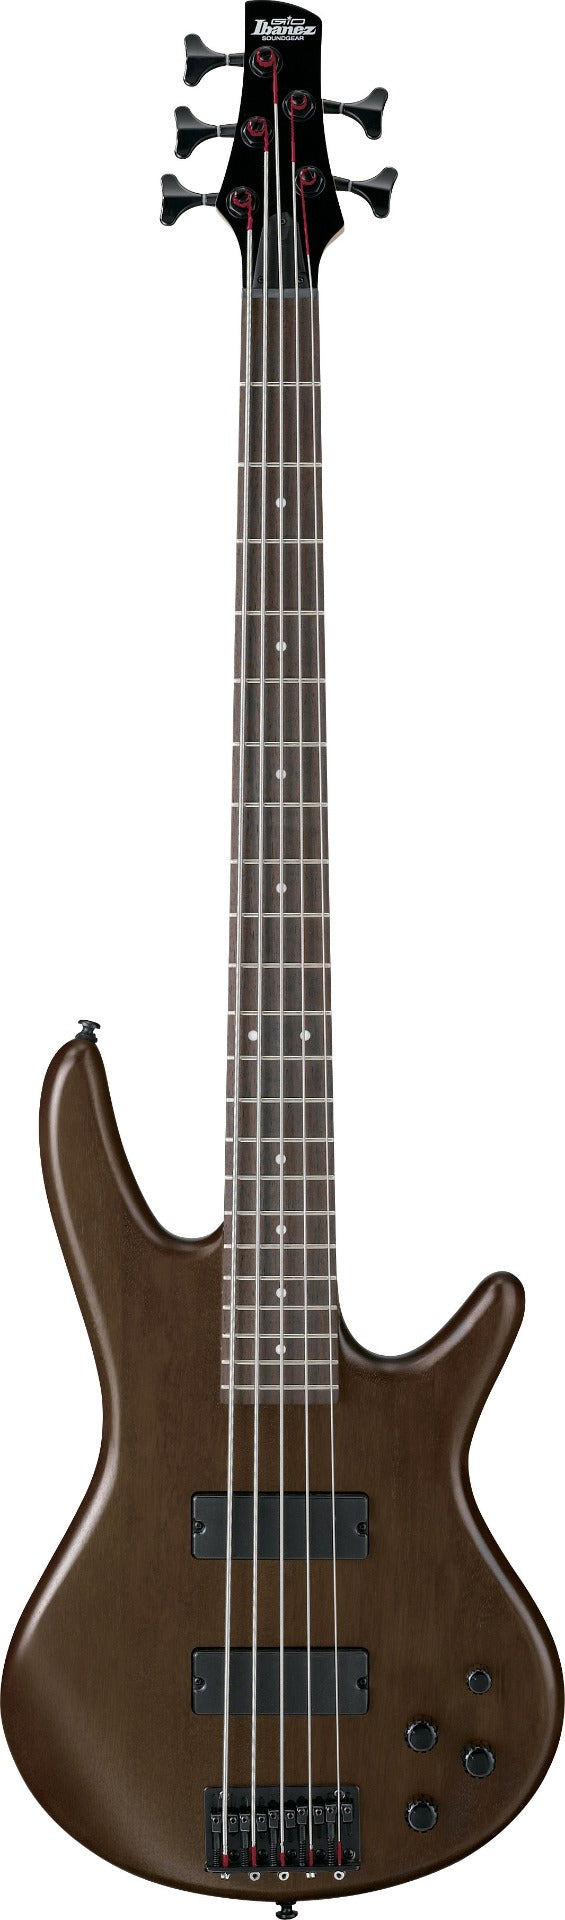 Ibanez GSR205 5-String Bass - Walnut Flat Finish